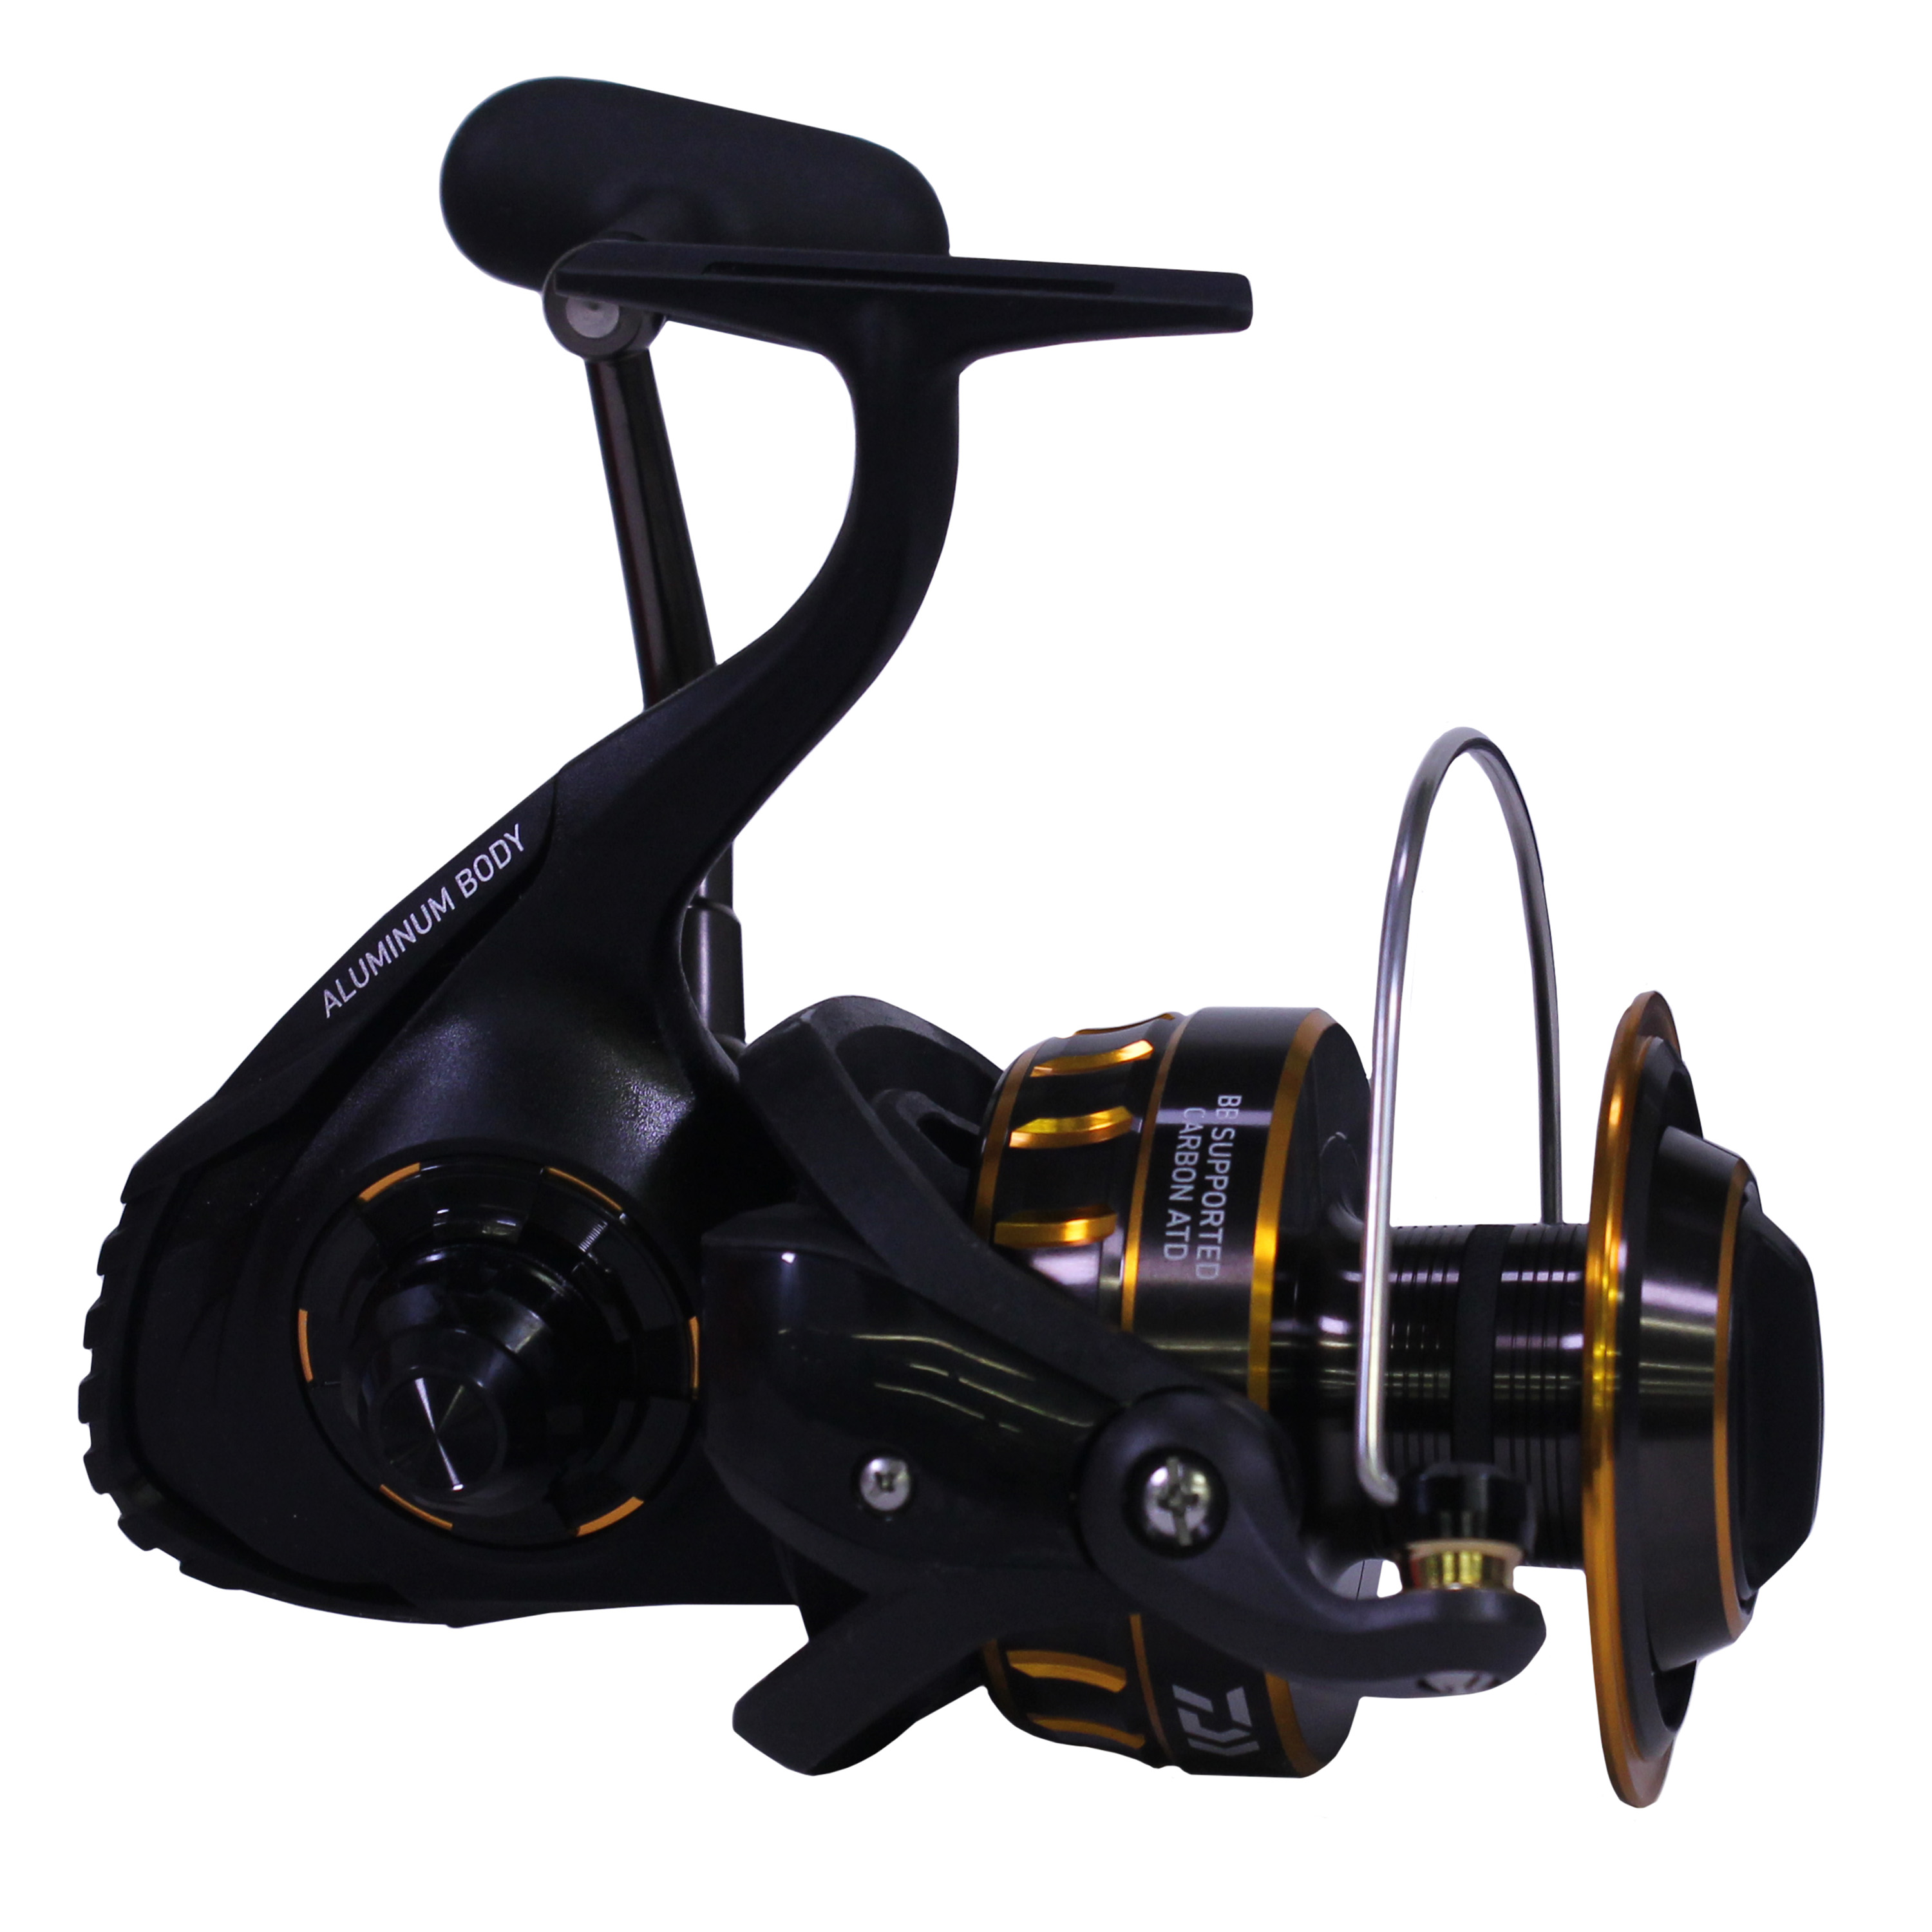 Fishing Reel Daiwa BGRR LT8000-P-ARK Spinning Reel at best price